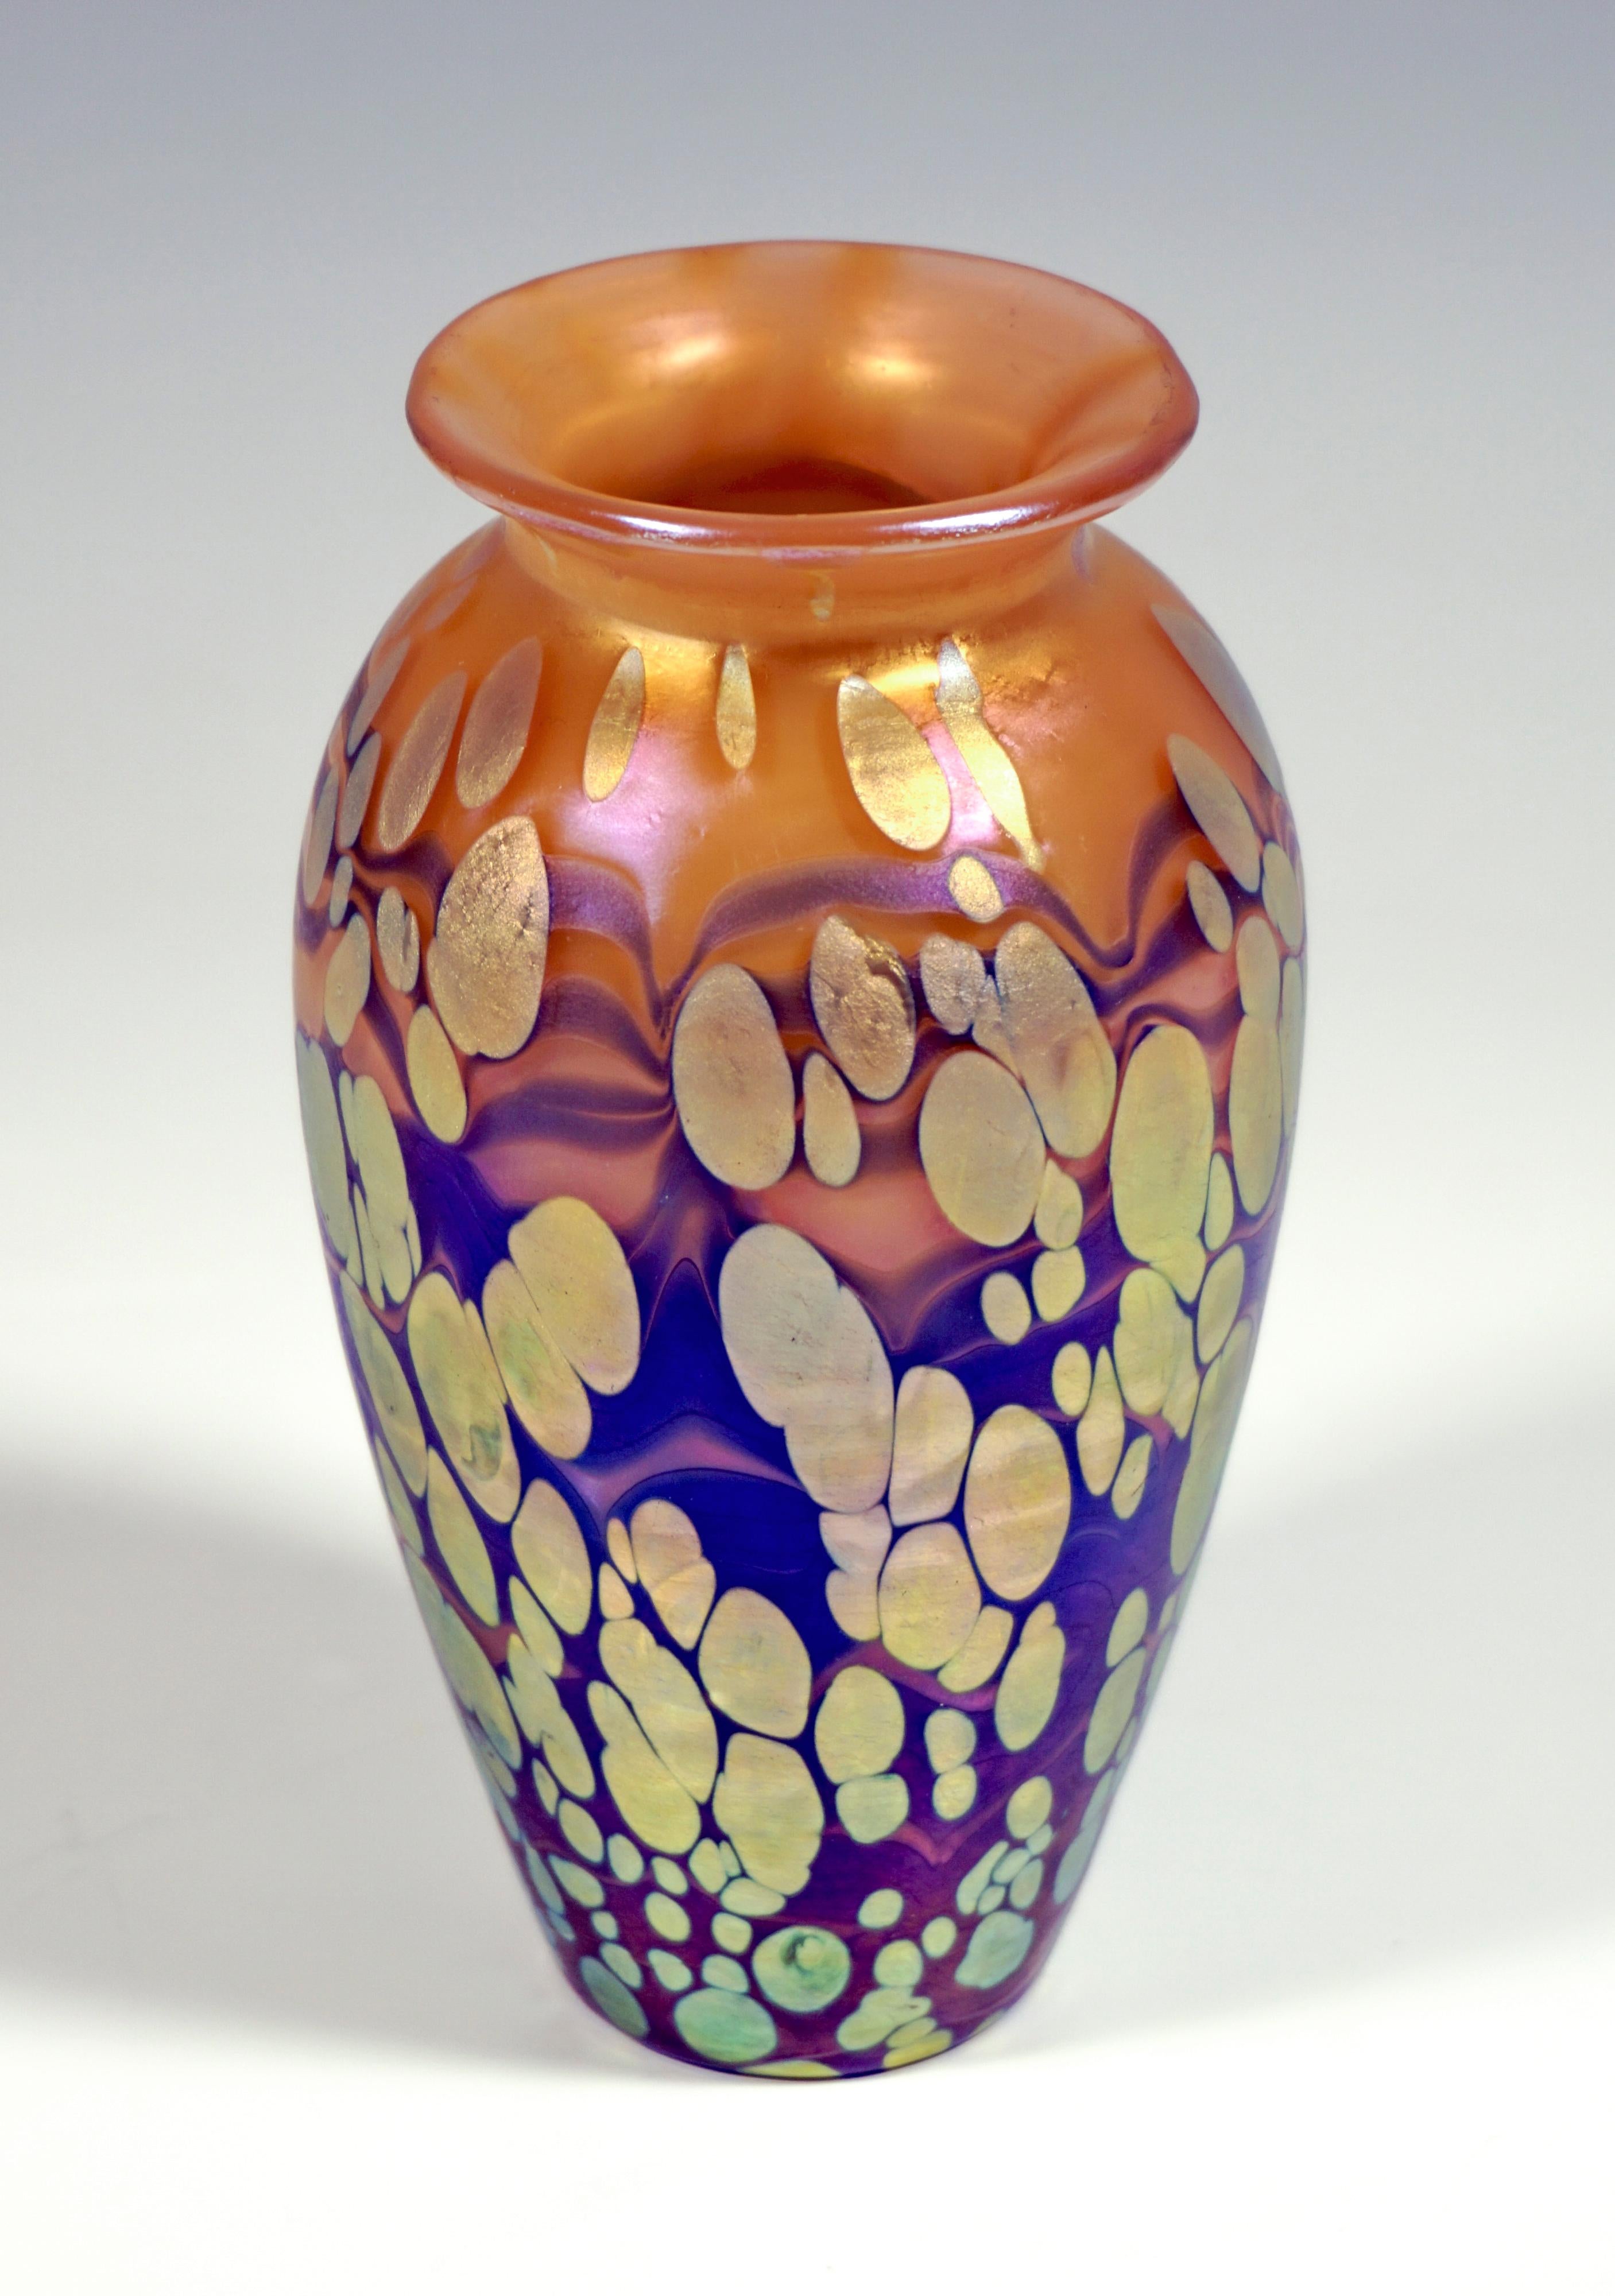 Hand-Crafted Loetz Art Nouveau Vase, Decor New-Red Cytisus, Austria-Hungary, Around 1902